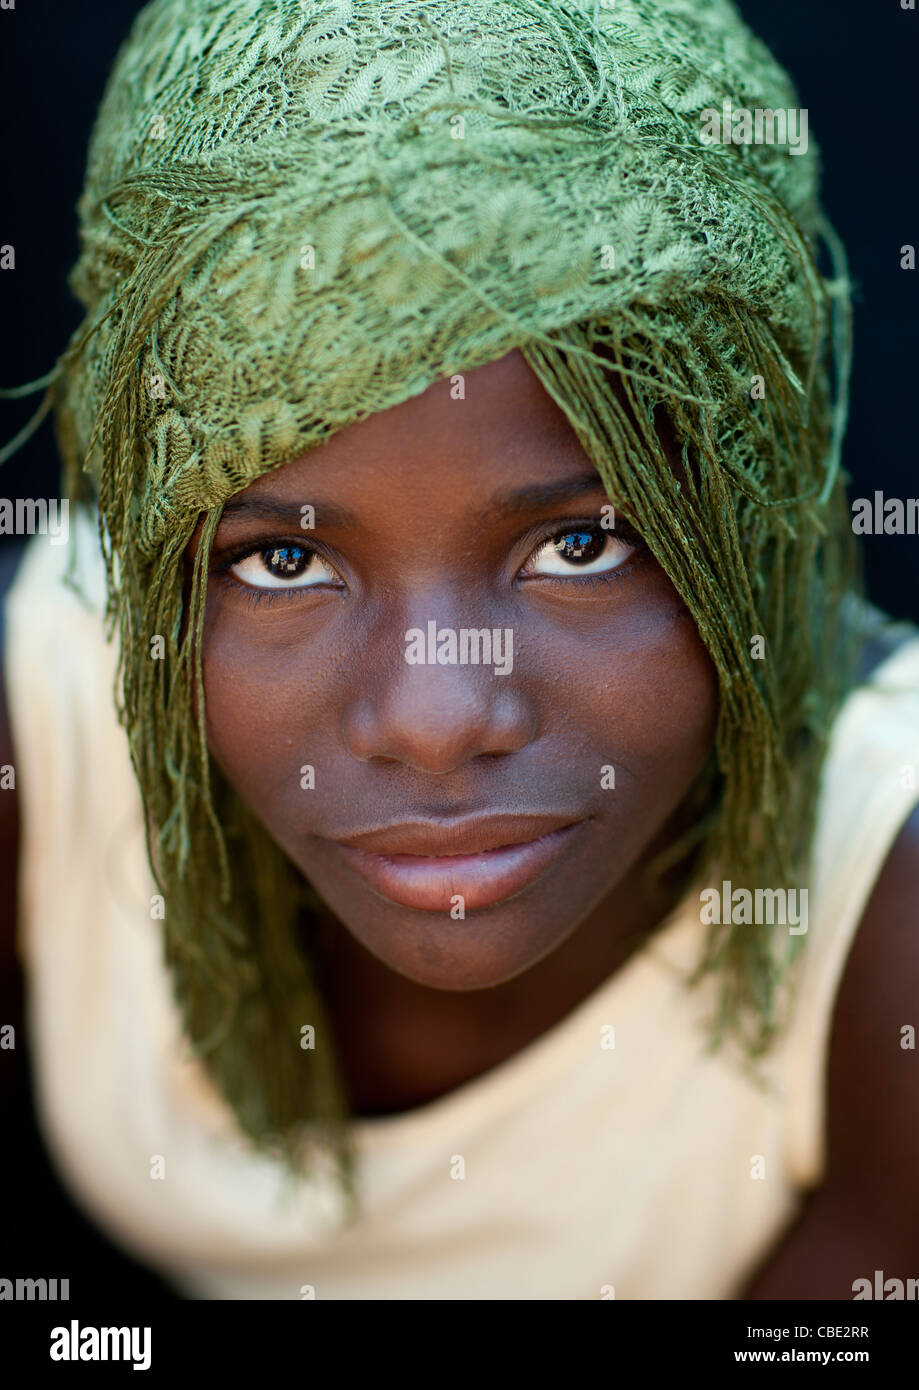 Misses Caroline, A Mudimba Girl Wearing A Beaded Wig, Village Of Combelo, Angola Stock Photo